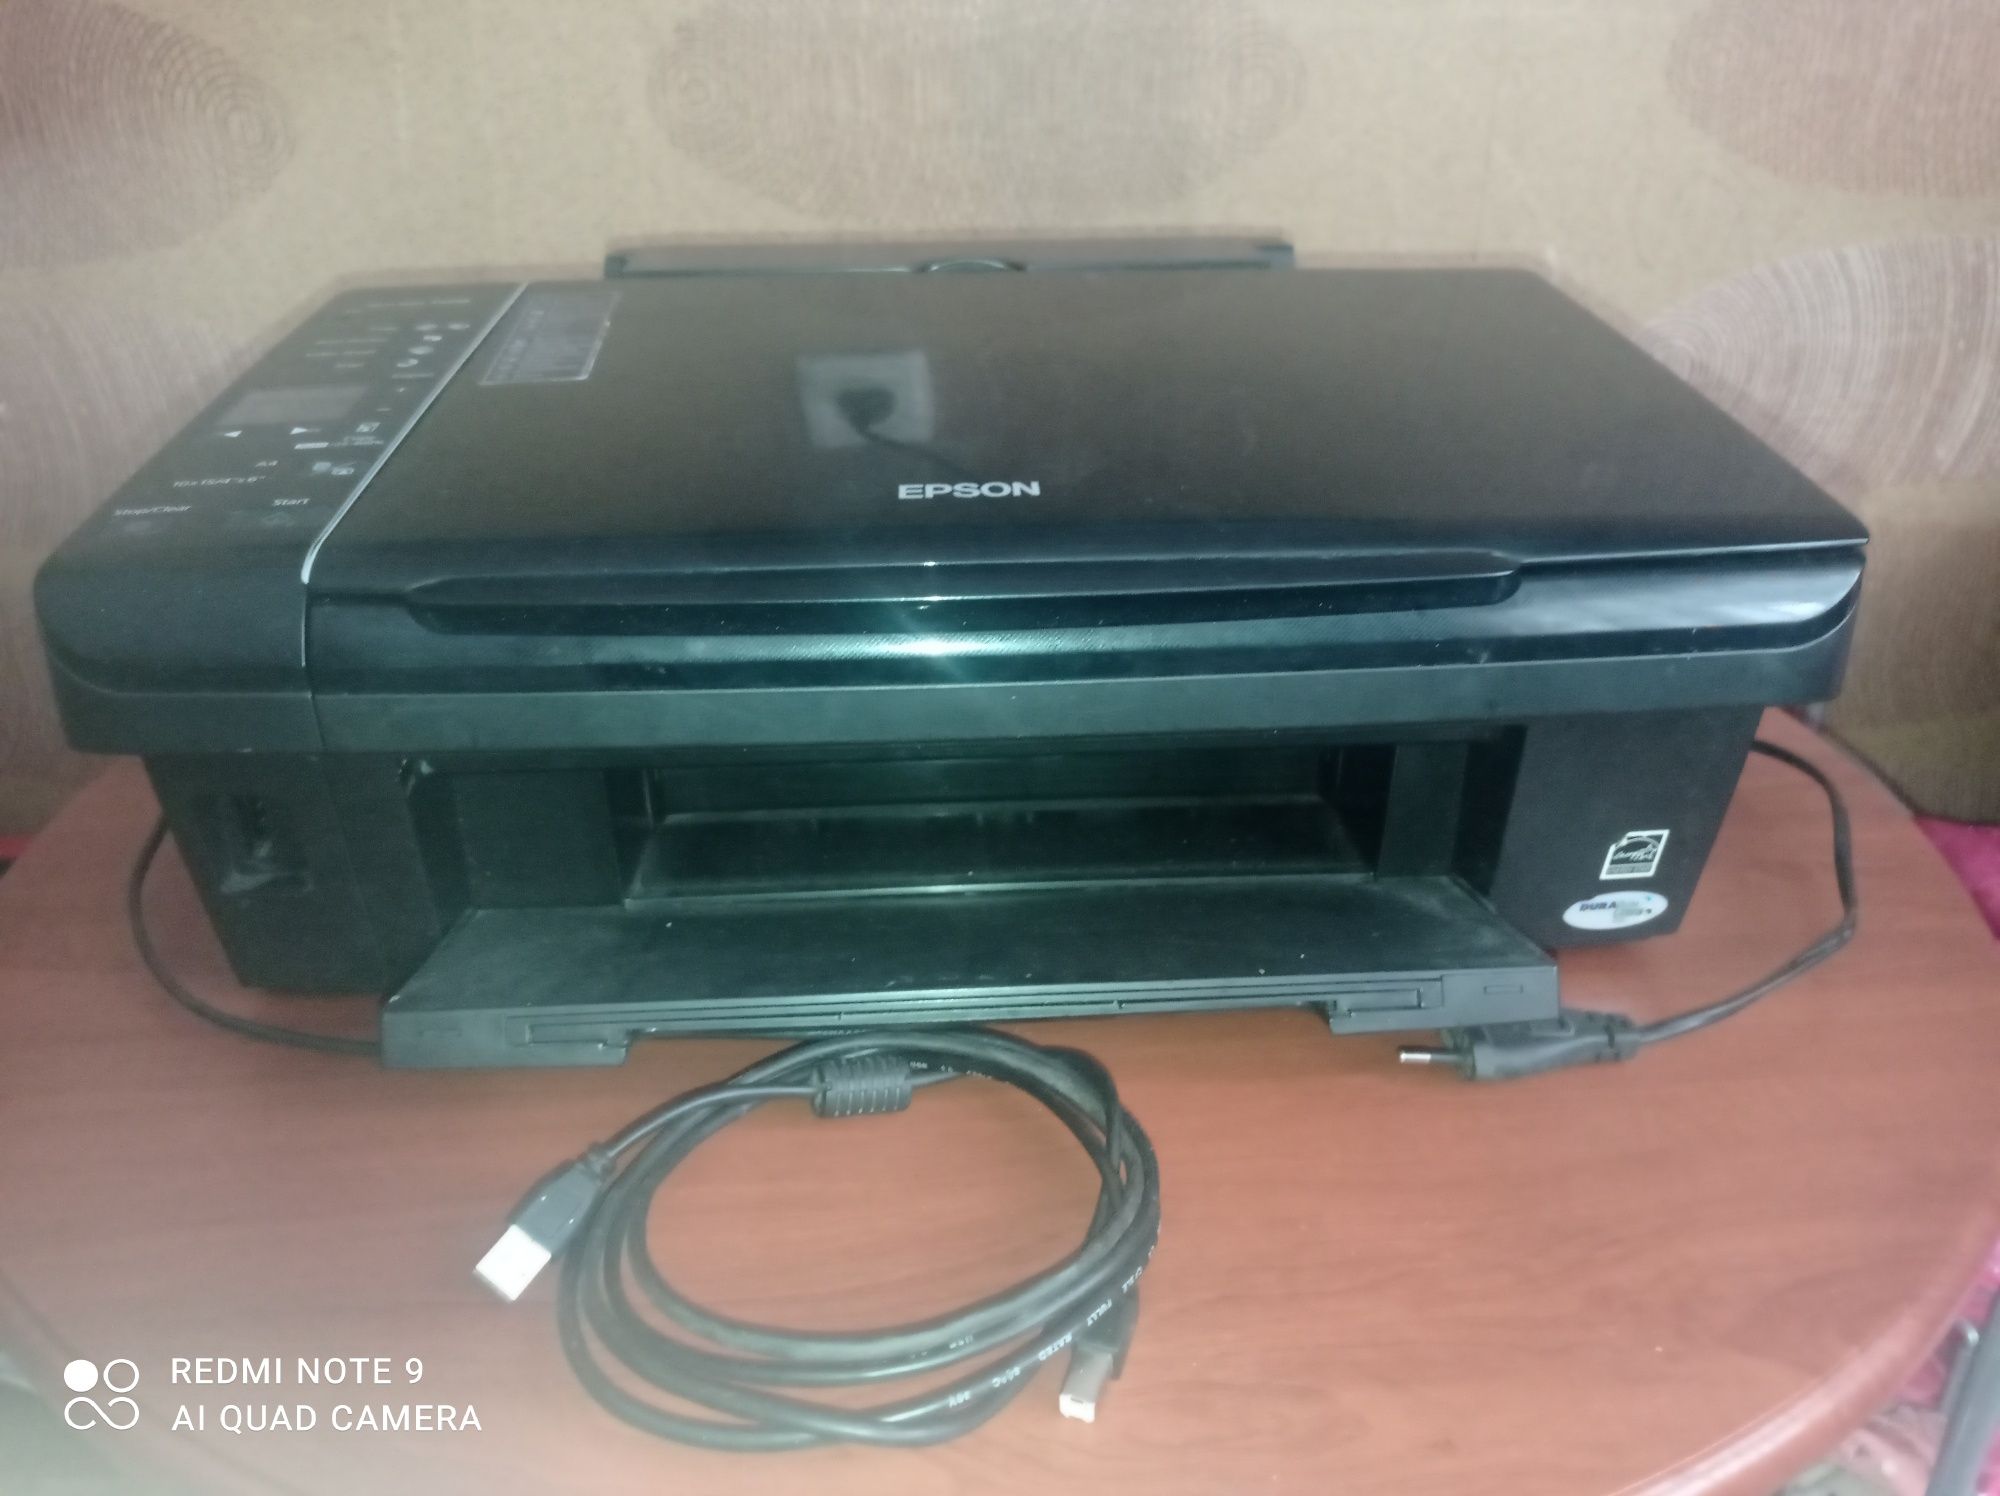 Сканер принтер EPSON TX219